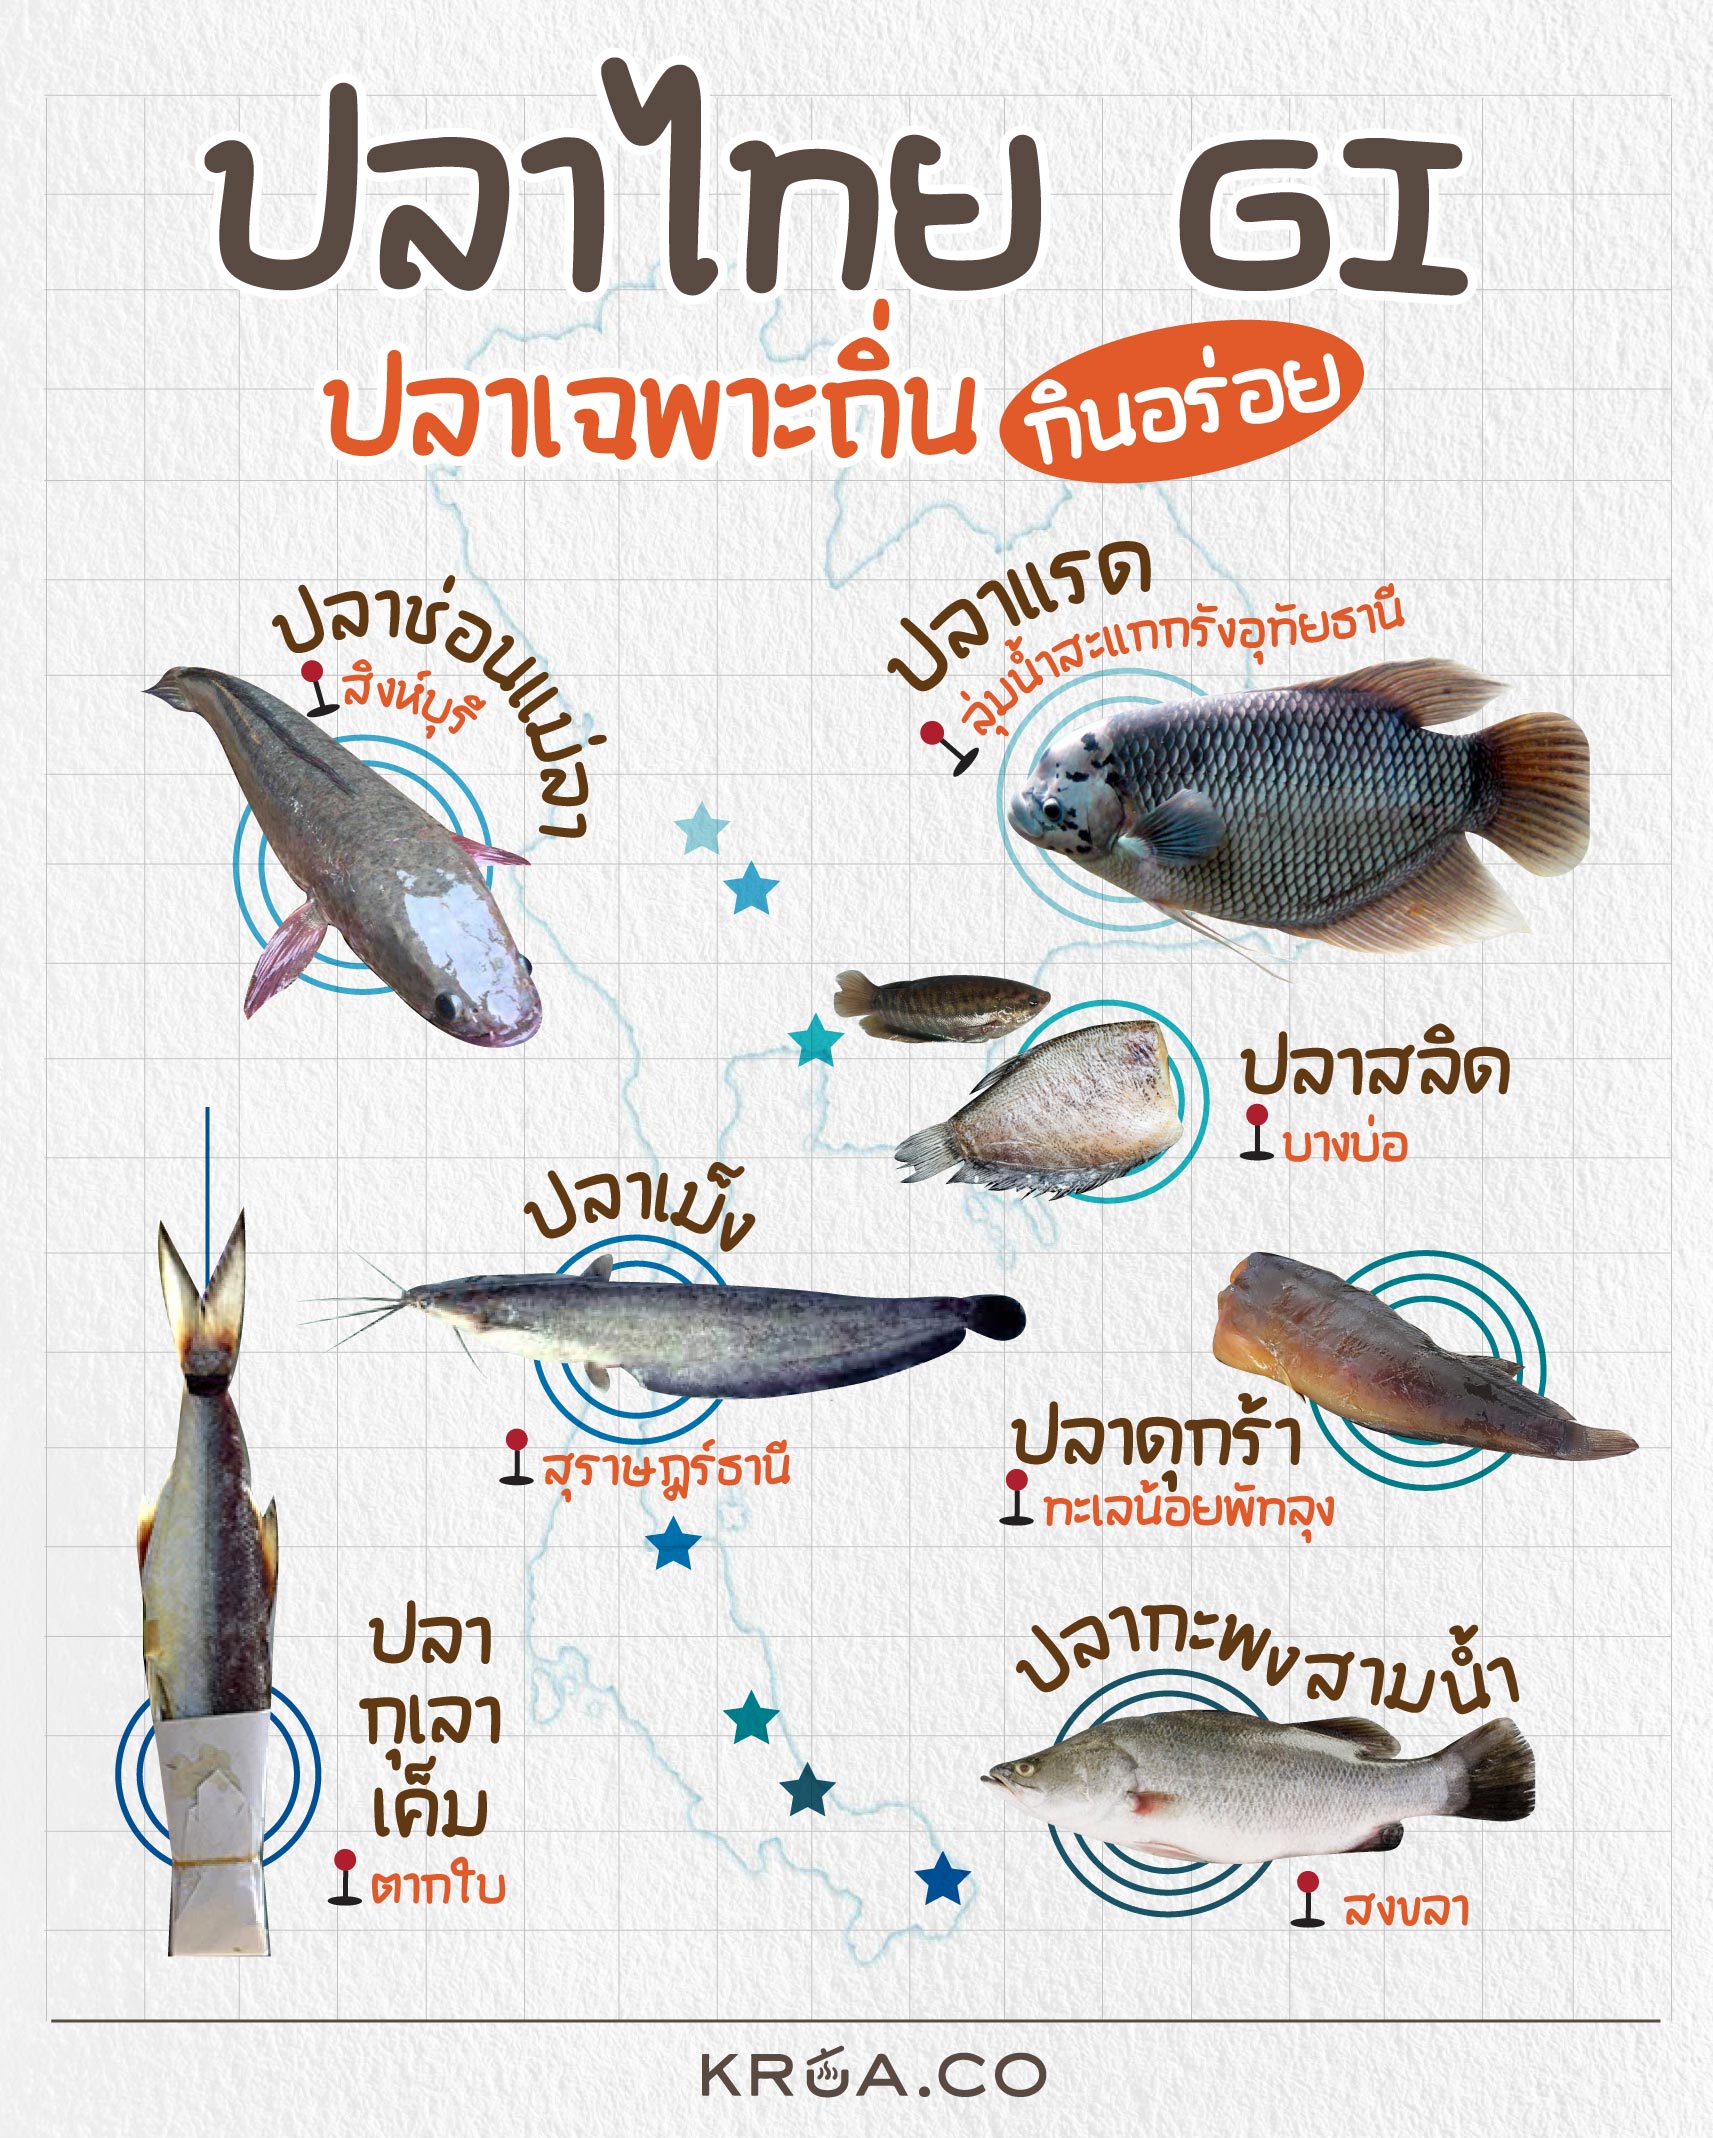 GI, GI ไทย, สินค้า GI, ปลาที่ได้ GI, ปลาไทย, ปลาเม็ง สุราษฎร์ธานี, ปลาสลิดบางบ่อ, ปลากุเลาเค็ม ตากใบ, ปลาแรด ลุ่มน้ำสะแกกรัง อุทัยธานี, ปลากะพงสามน้ำ สงขลา 